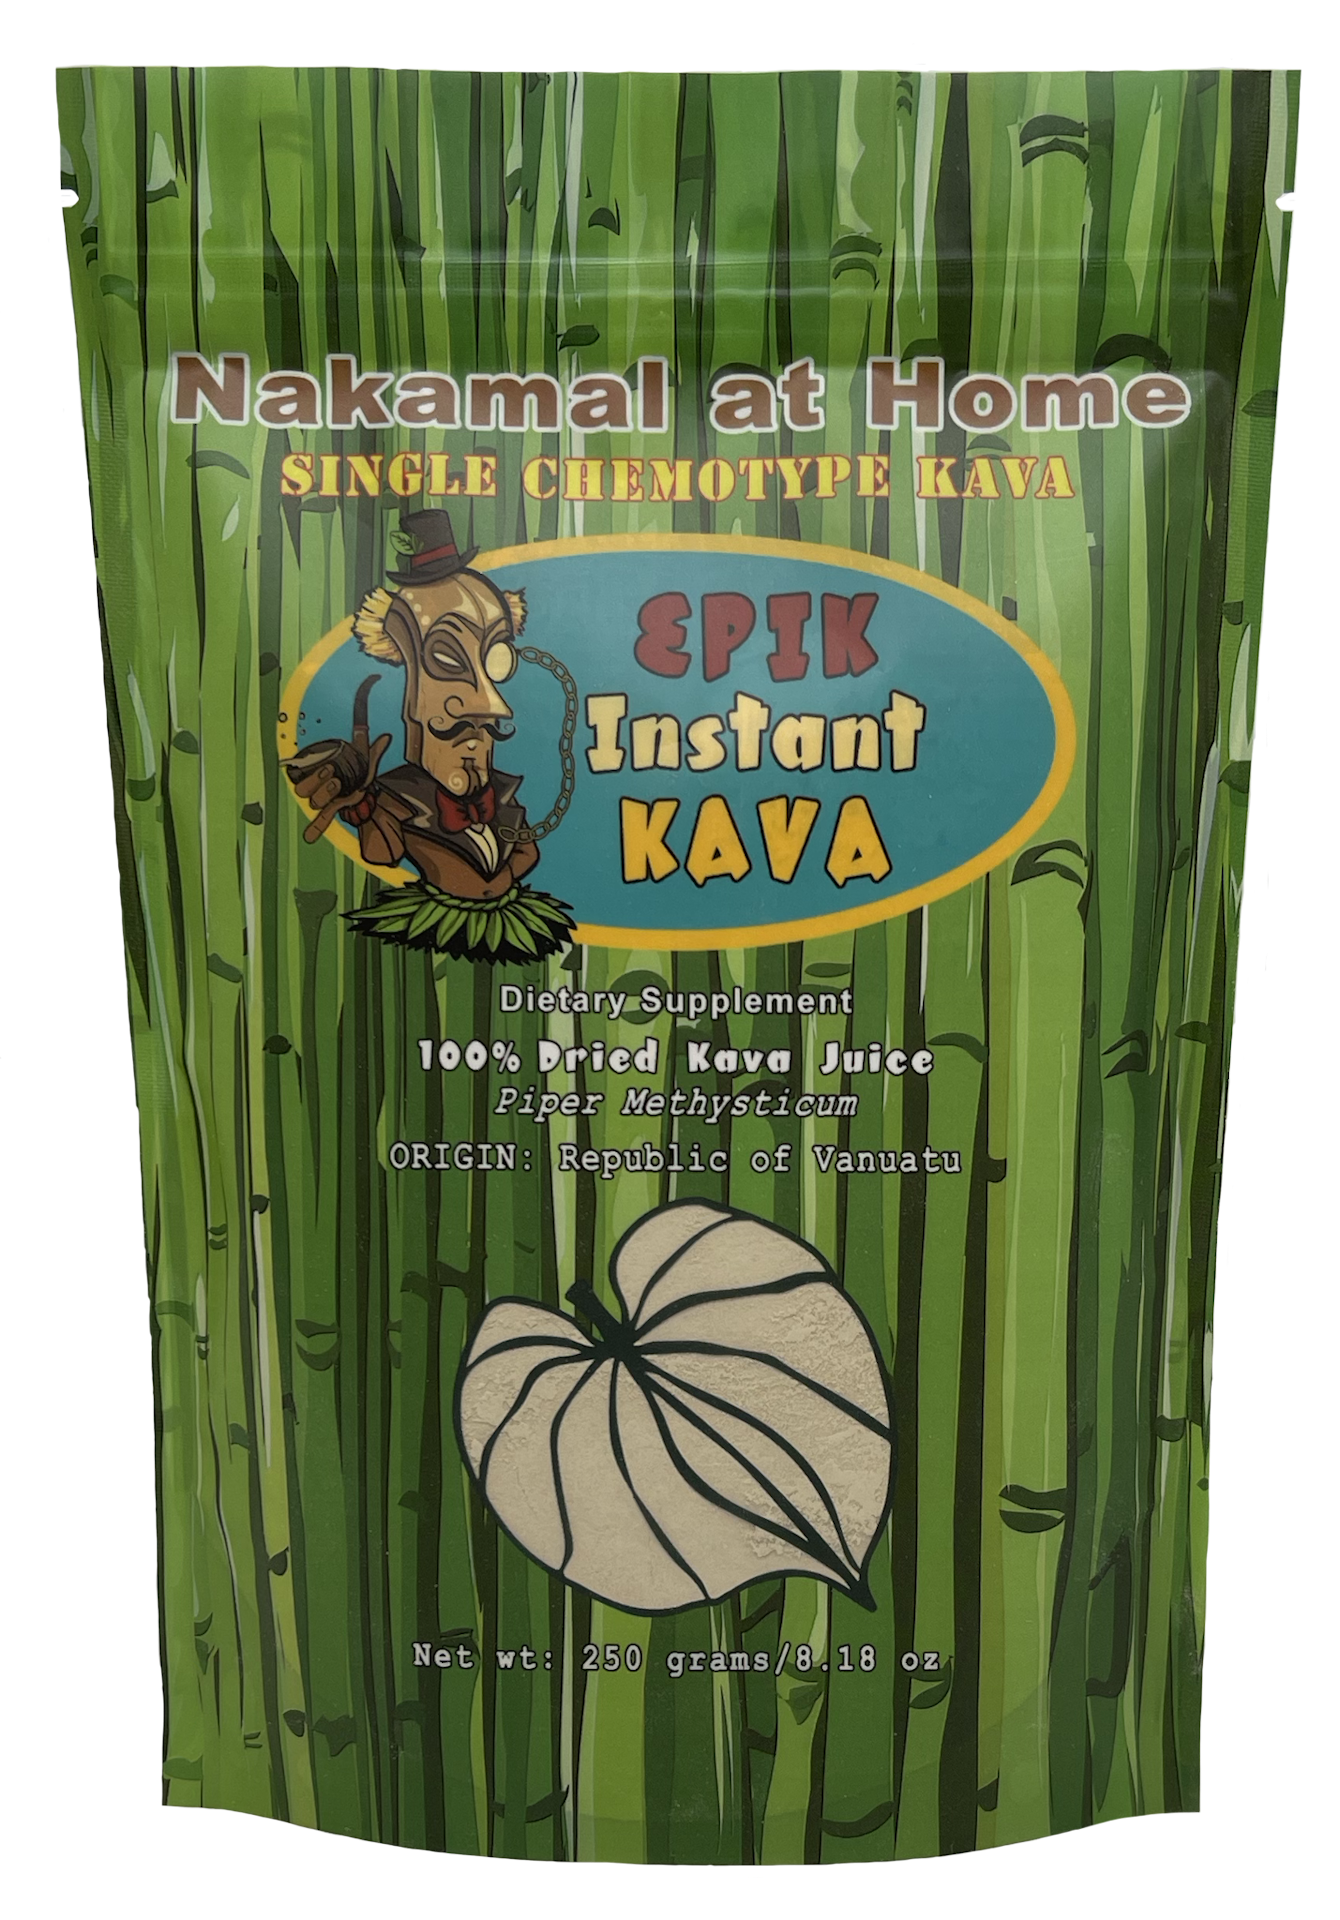 Epik Instant Kava Palarasul 250 grams Nakamal At Home